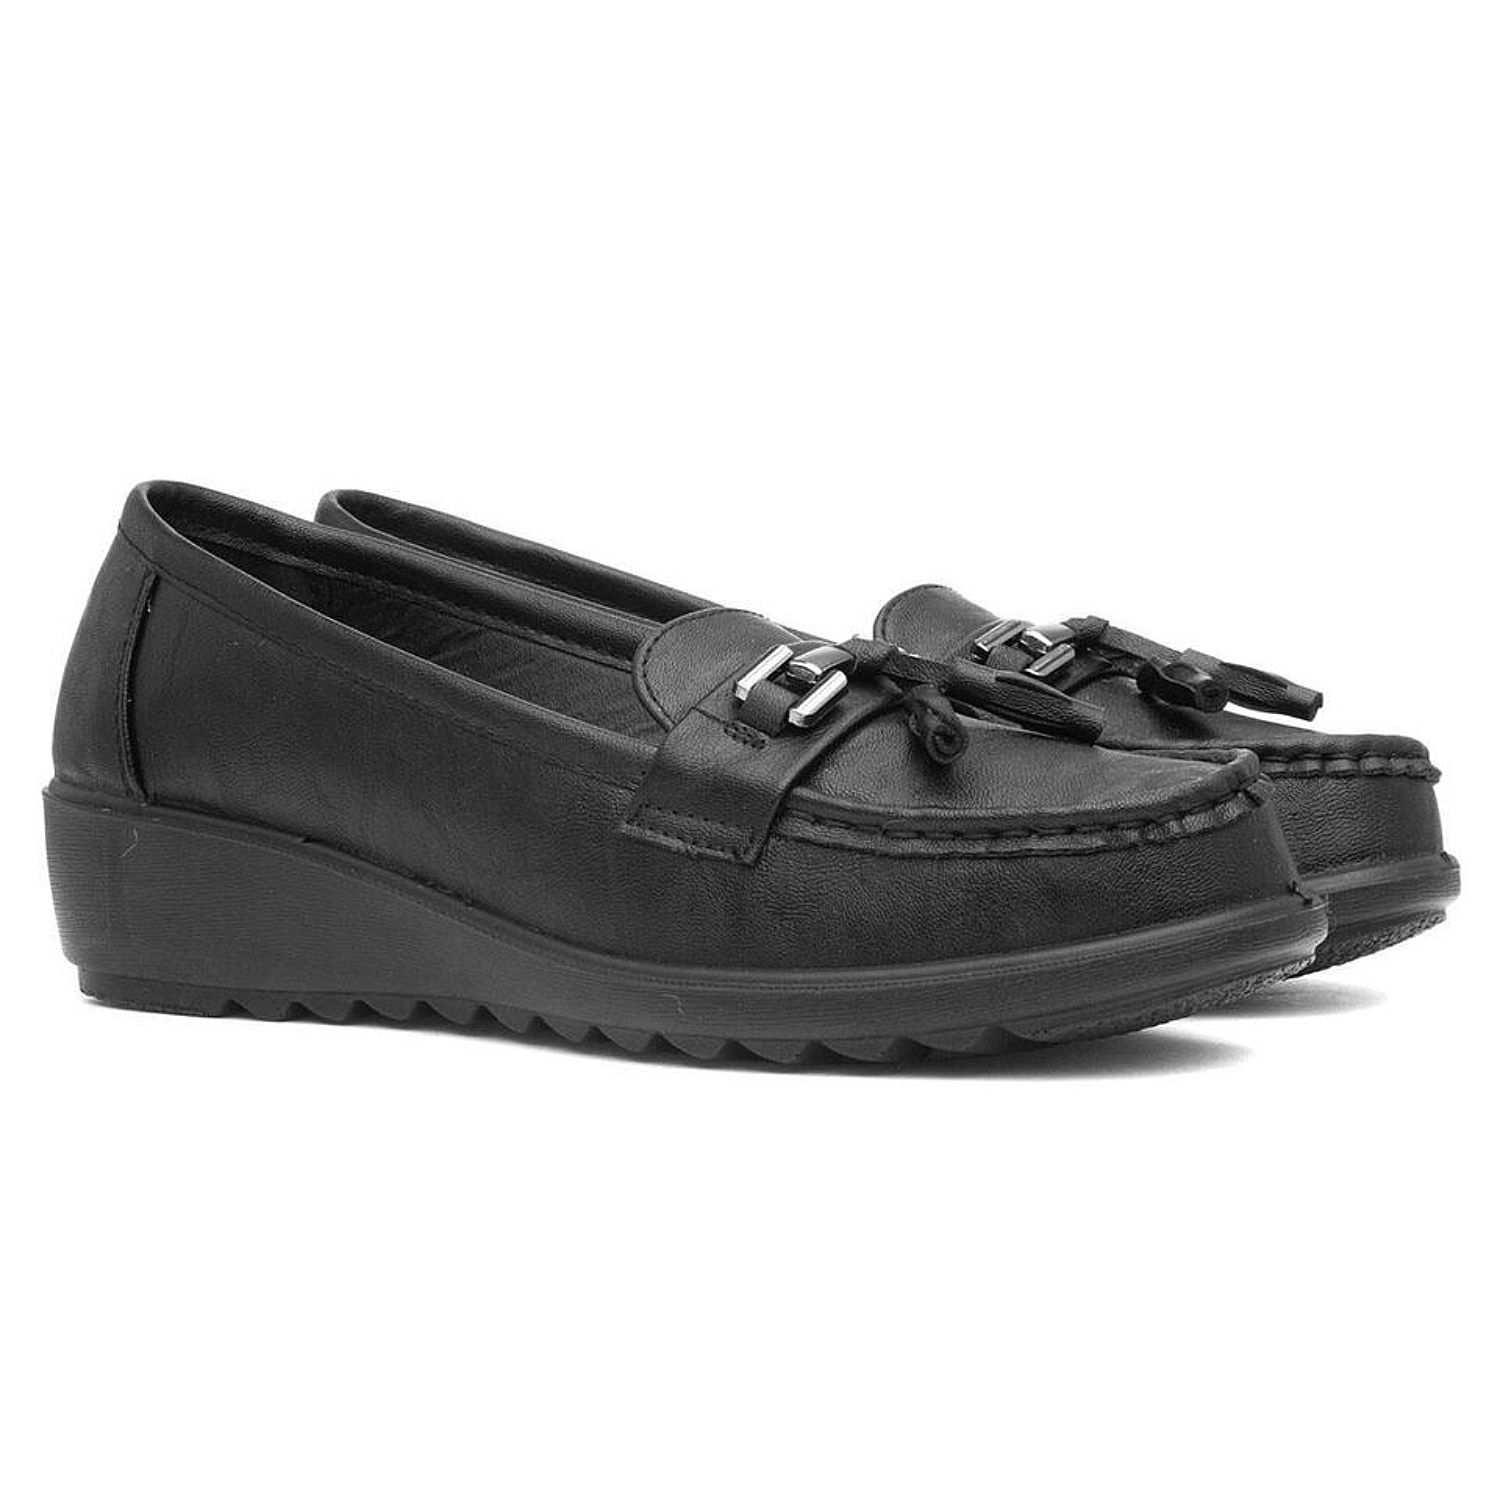 Ladies-Sandal-Size-3-Black